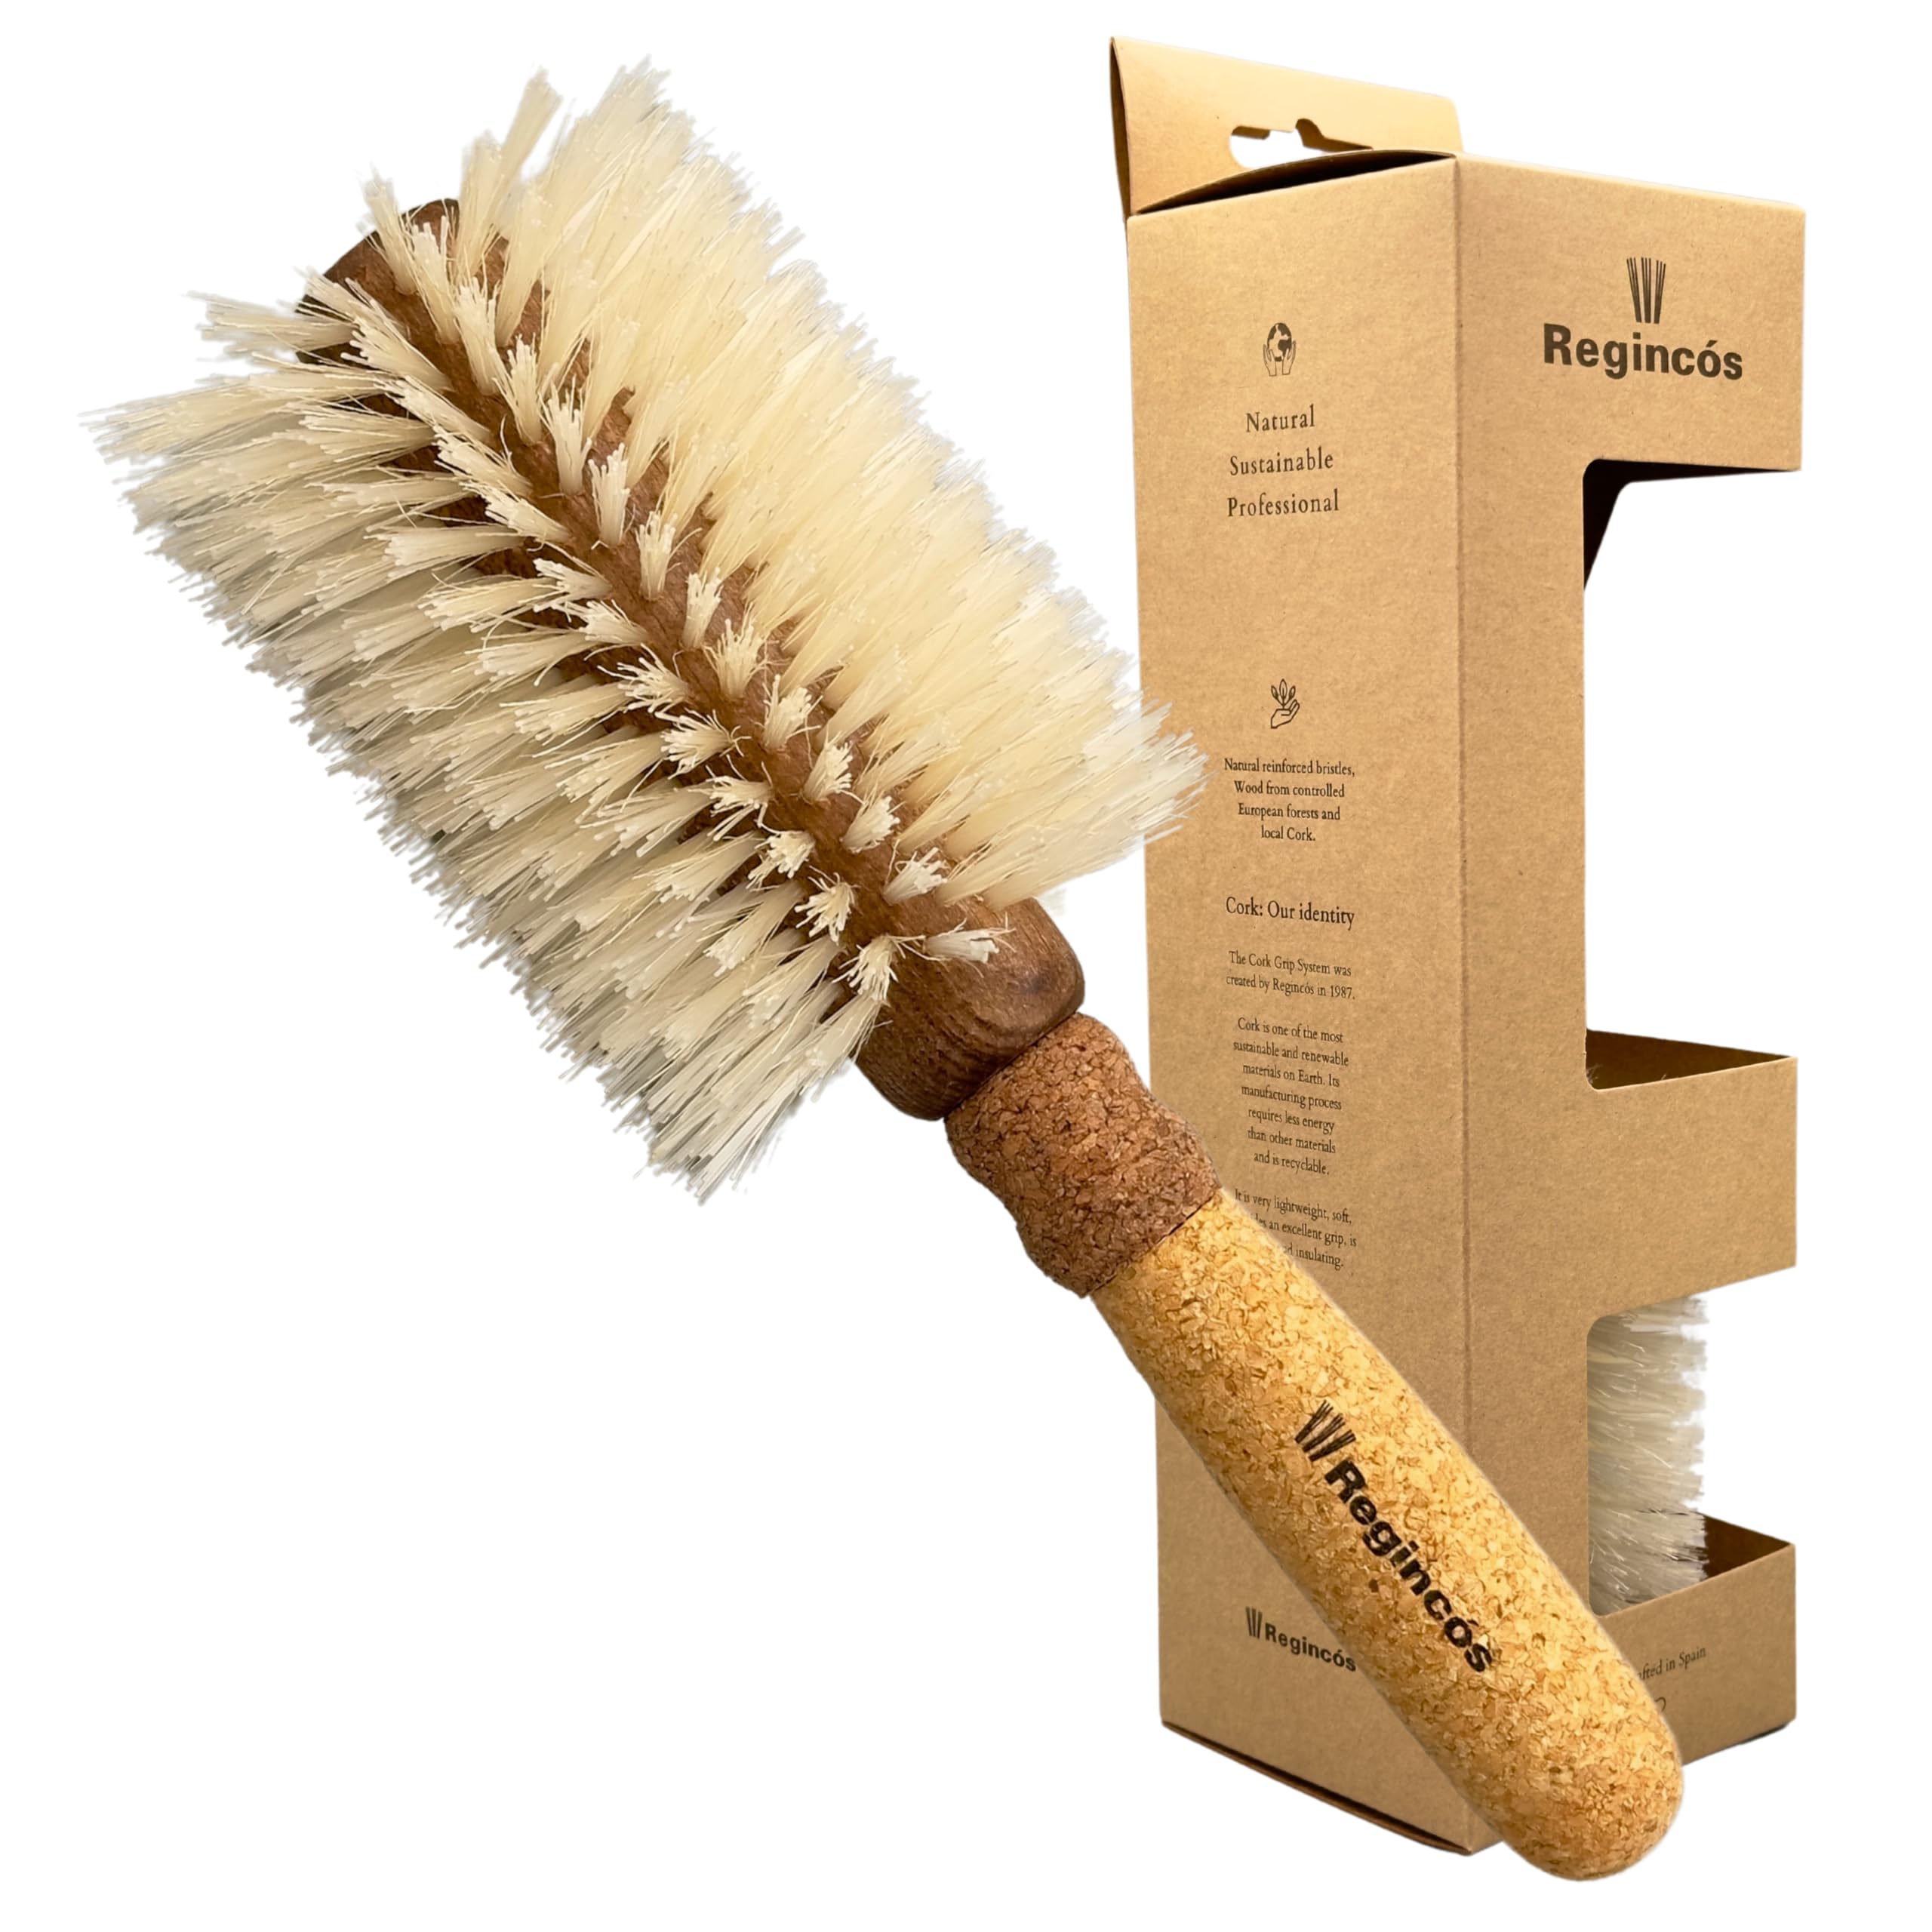 Regincós - Rundbürste - Korkholz Eco - E.Cork Blonde 870 Natural - Professionell - Handgefertigt - XL